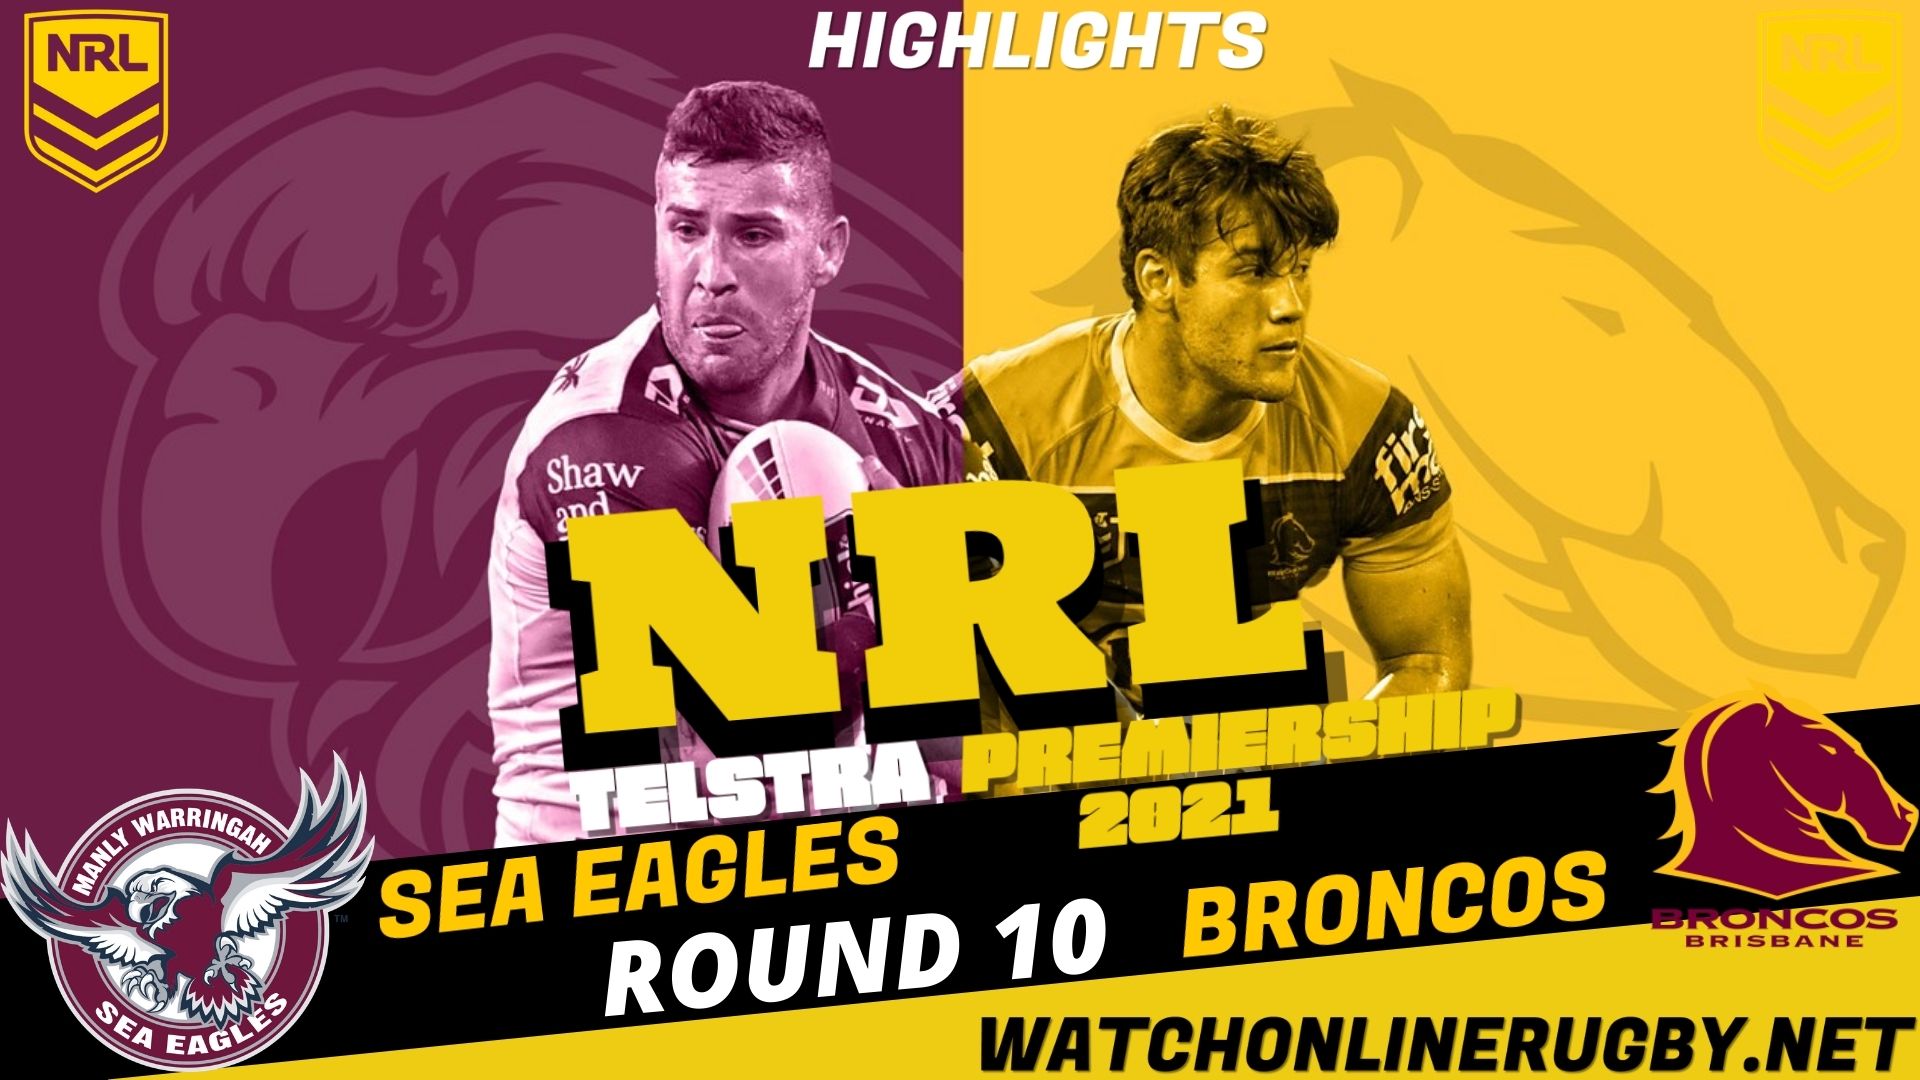 Sea Eagles Vs Broncos Highlights RD 10 NRL Rugby